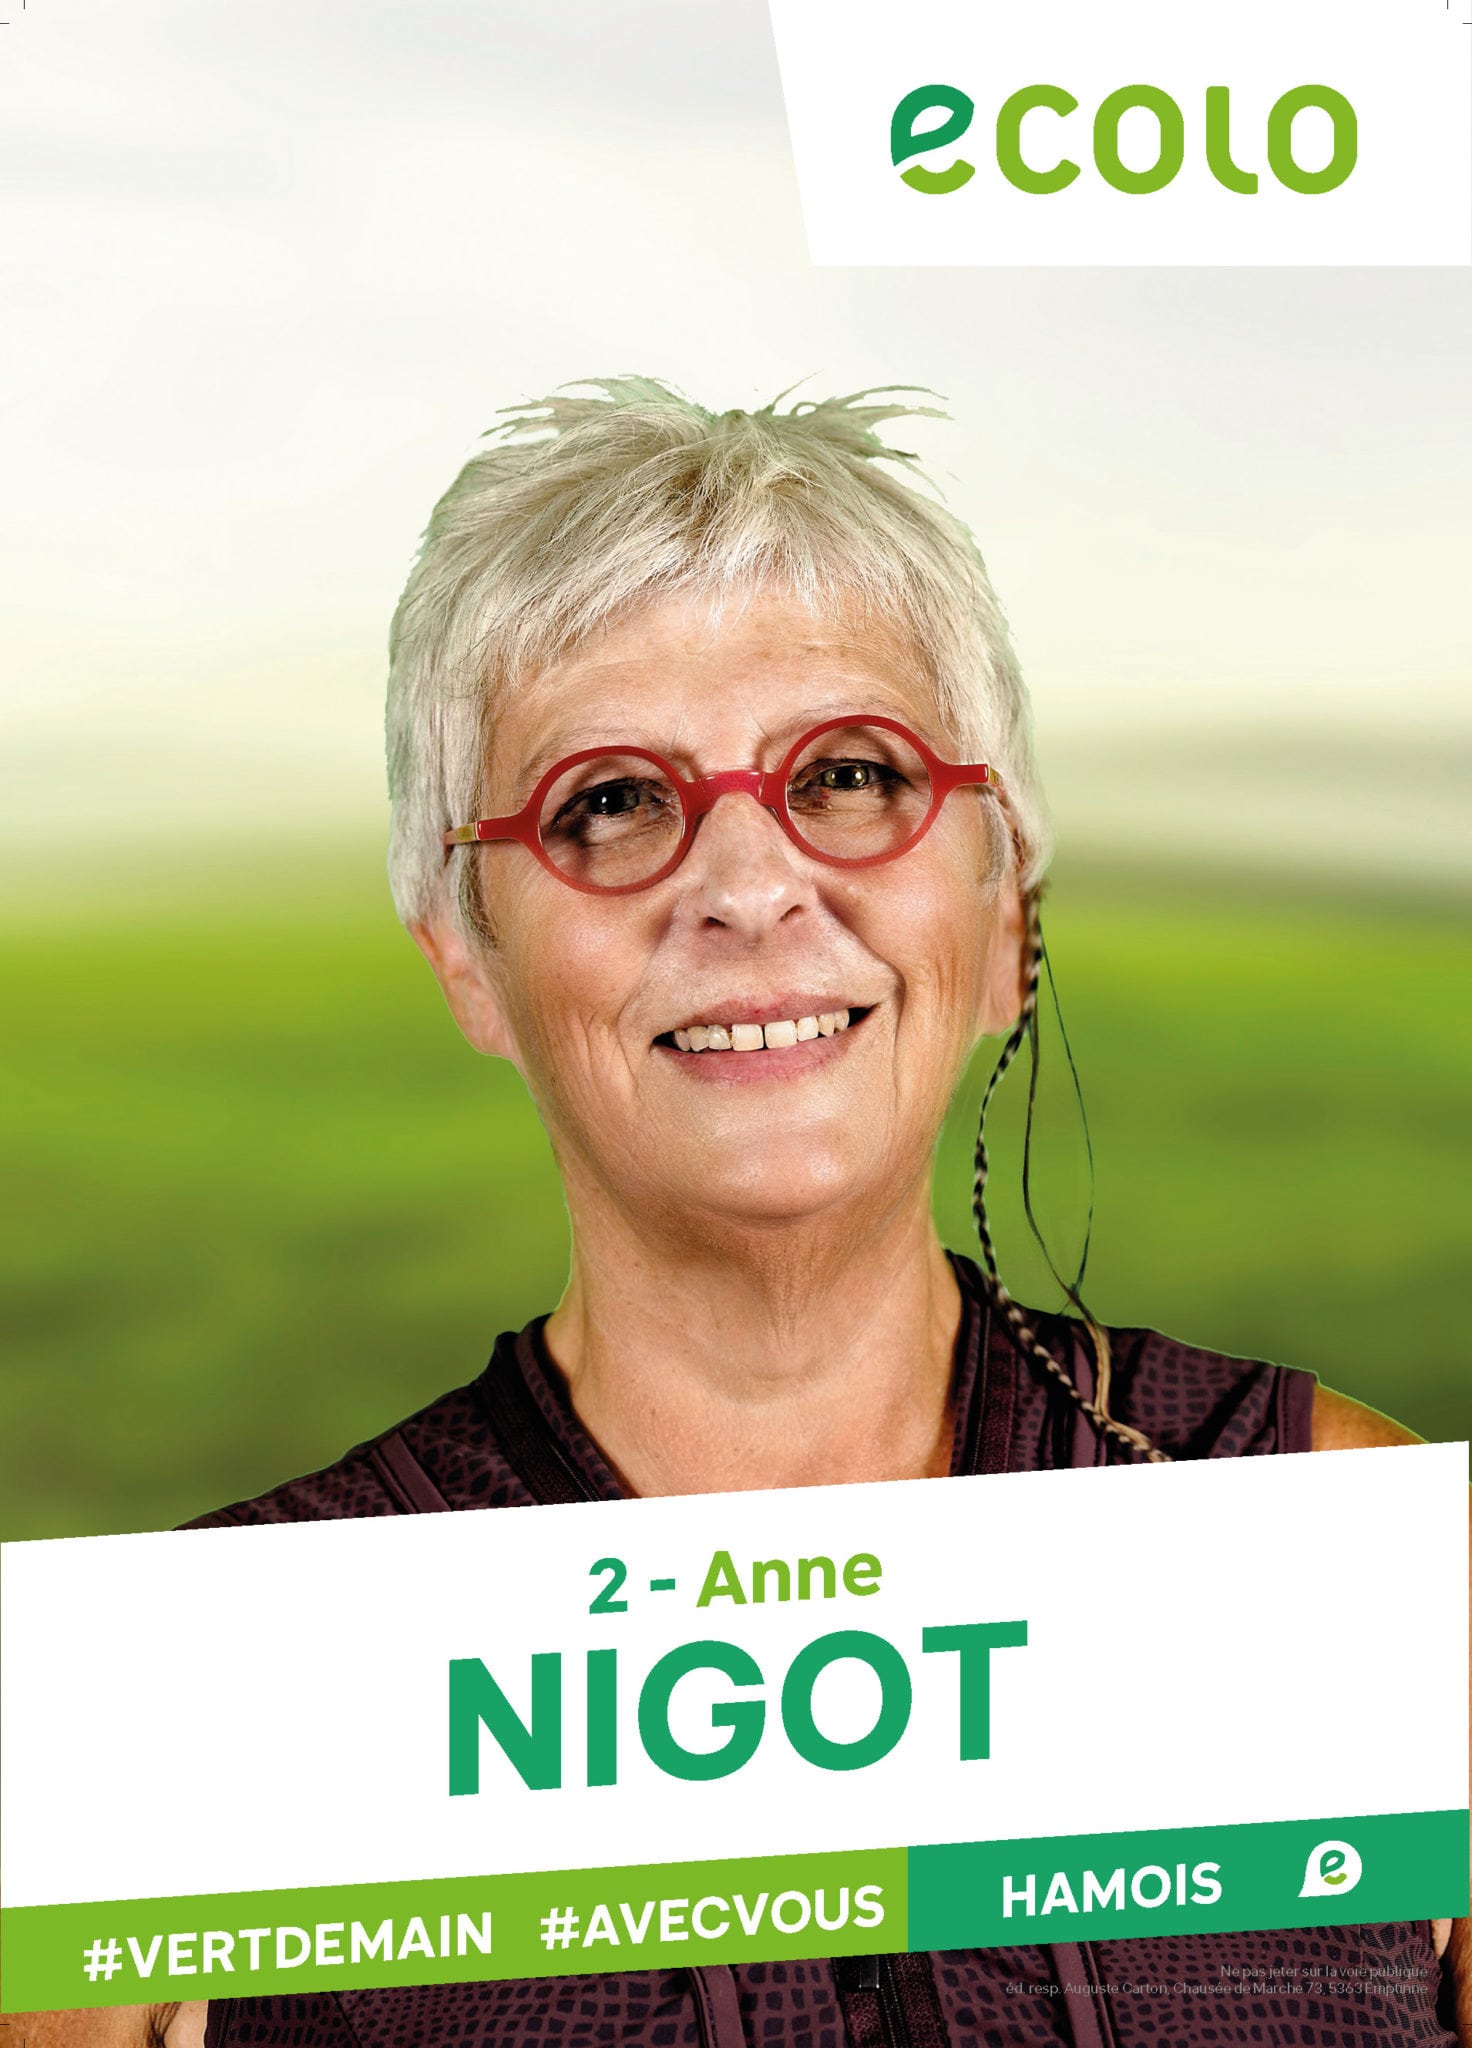 2 - Anne NIGOT